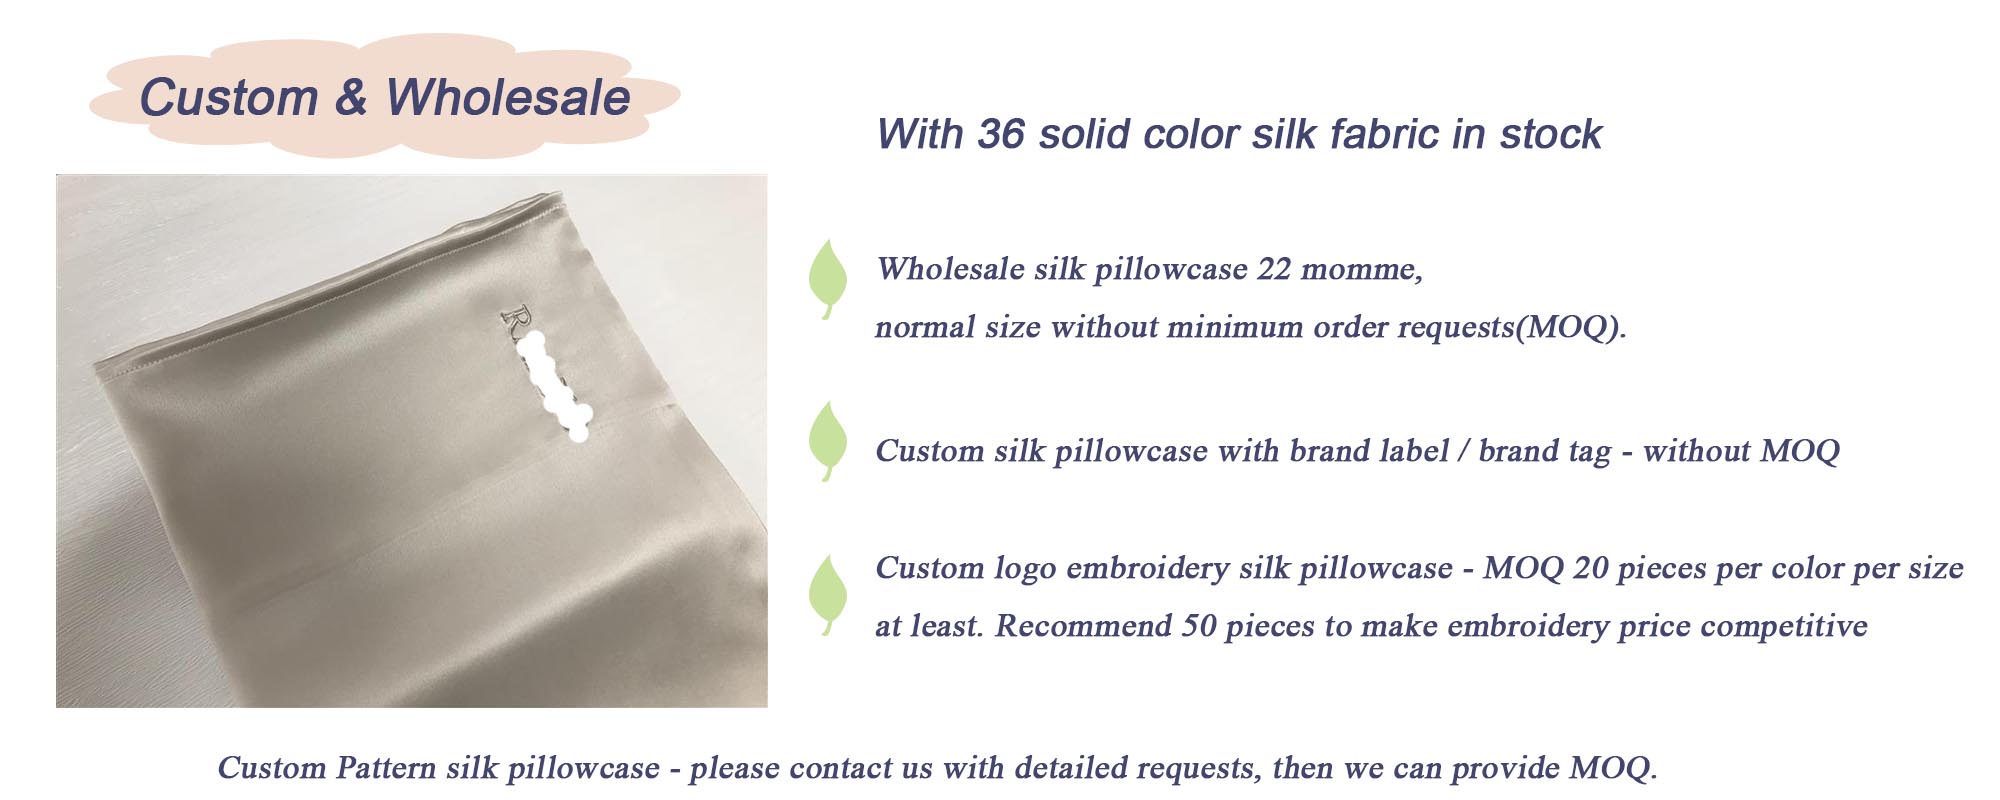 22 momme silk pillowcases